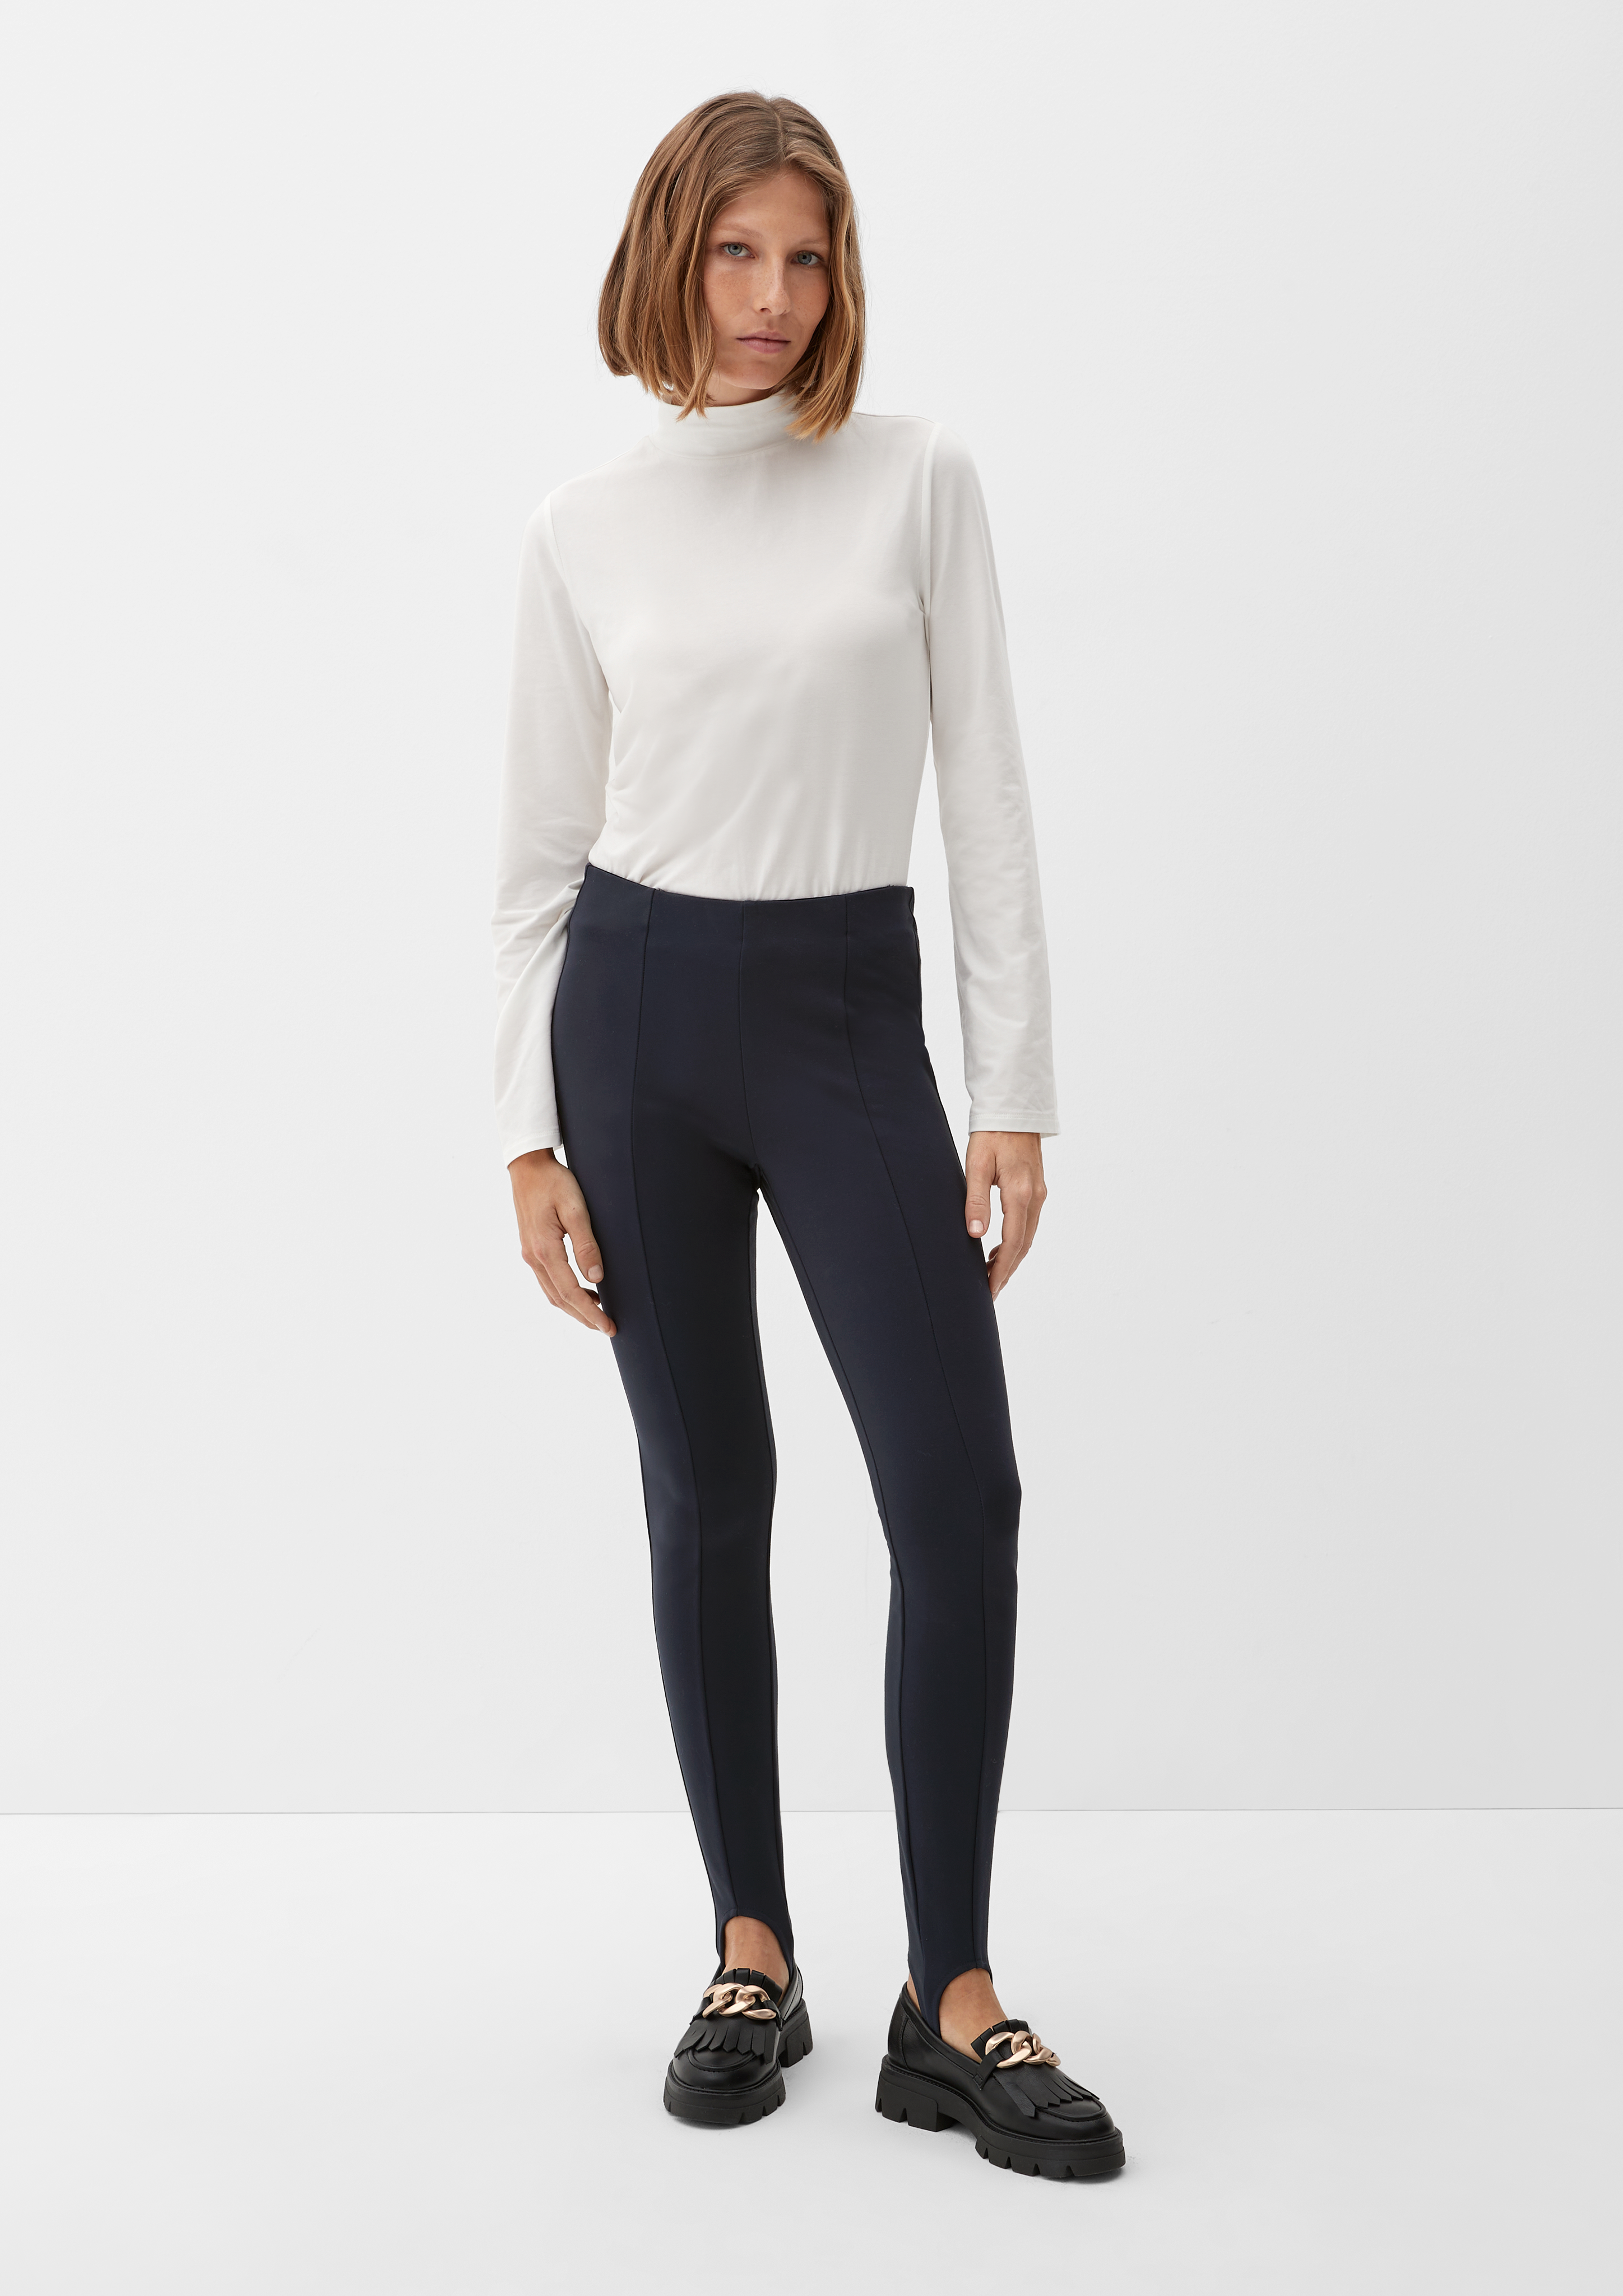 H&M Leggings  H&m leggings, Jeans outfit women, Black elastic waist pants